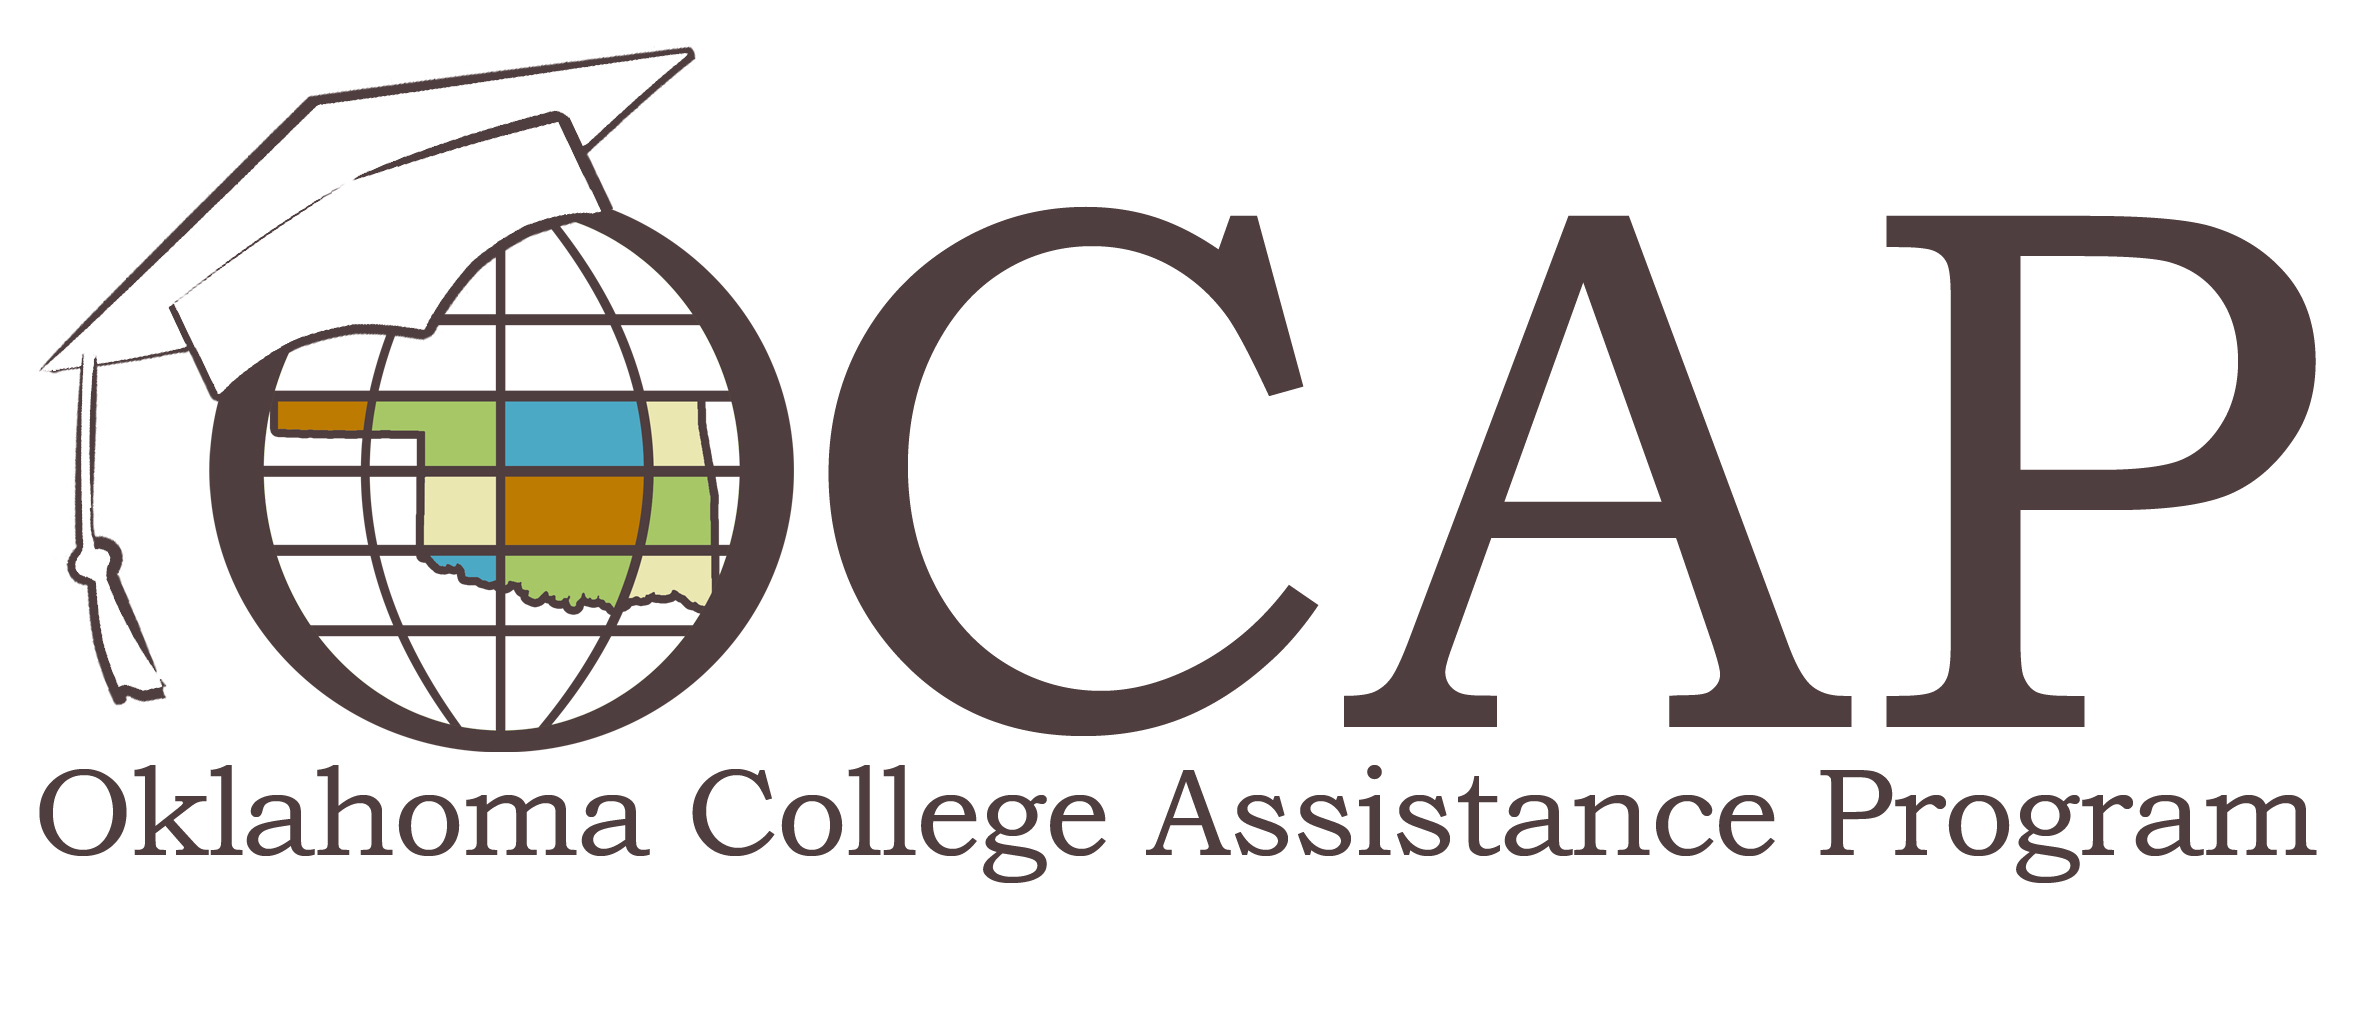 Oklahoma College Assistance Program